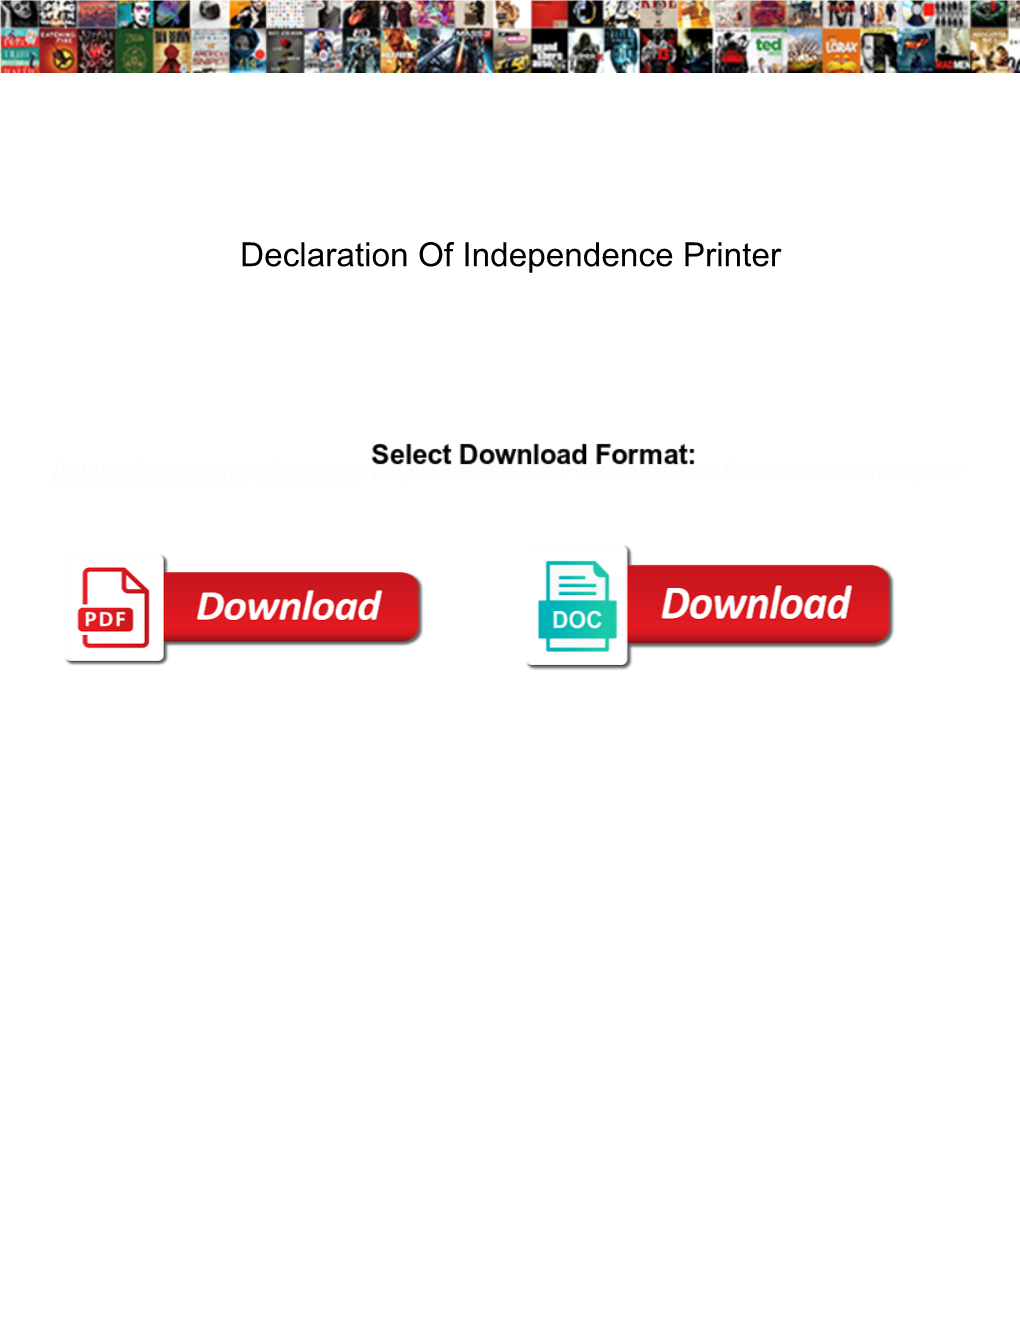 Declaration of Independence Printer